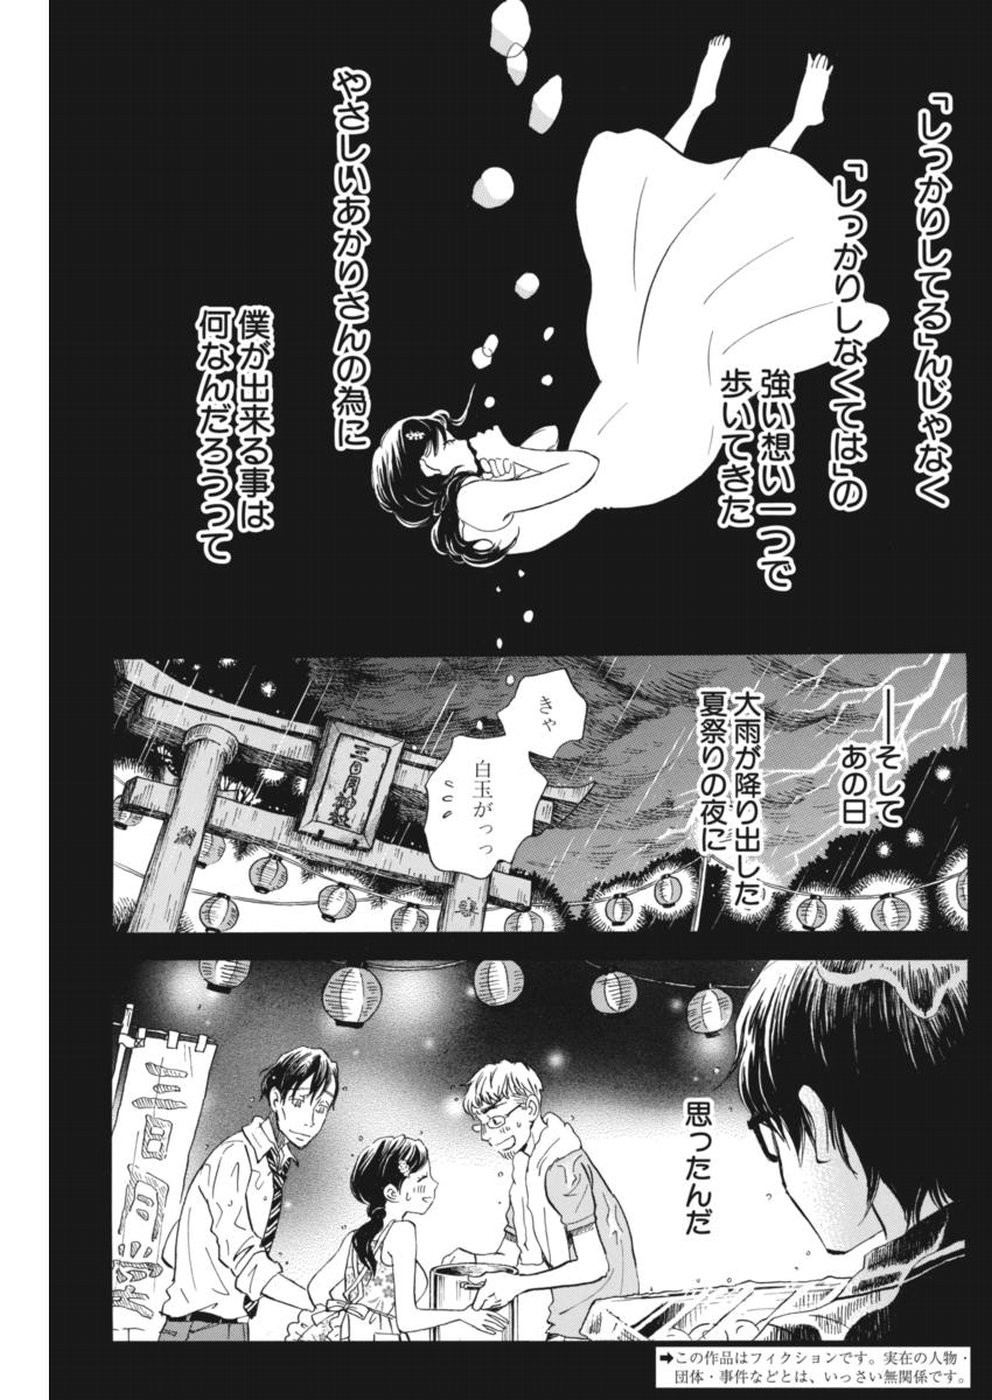 3 Gatsu no Lion - Chapter 143 - Page 3